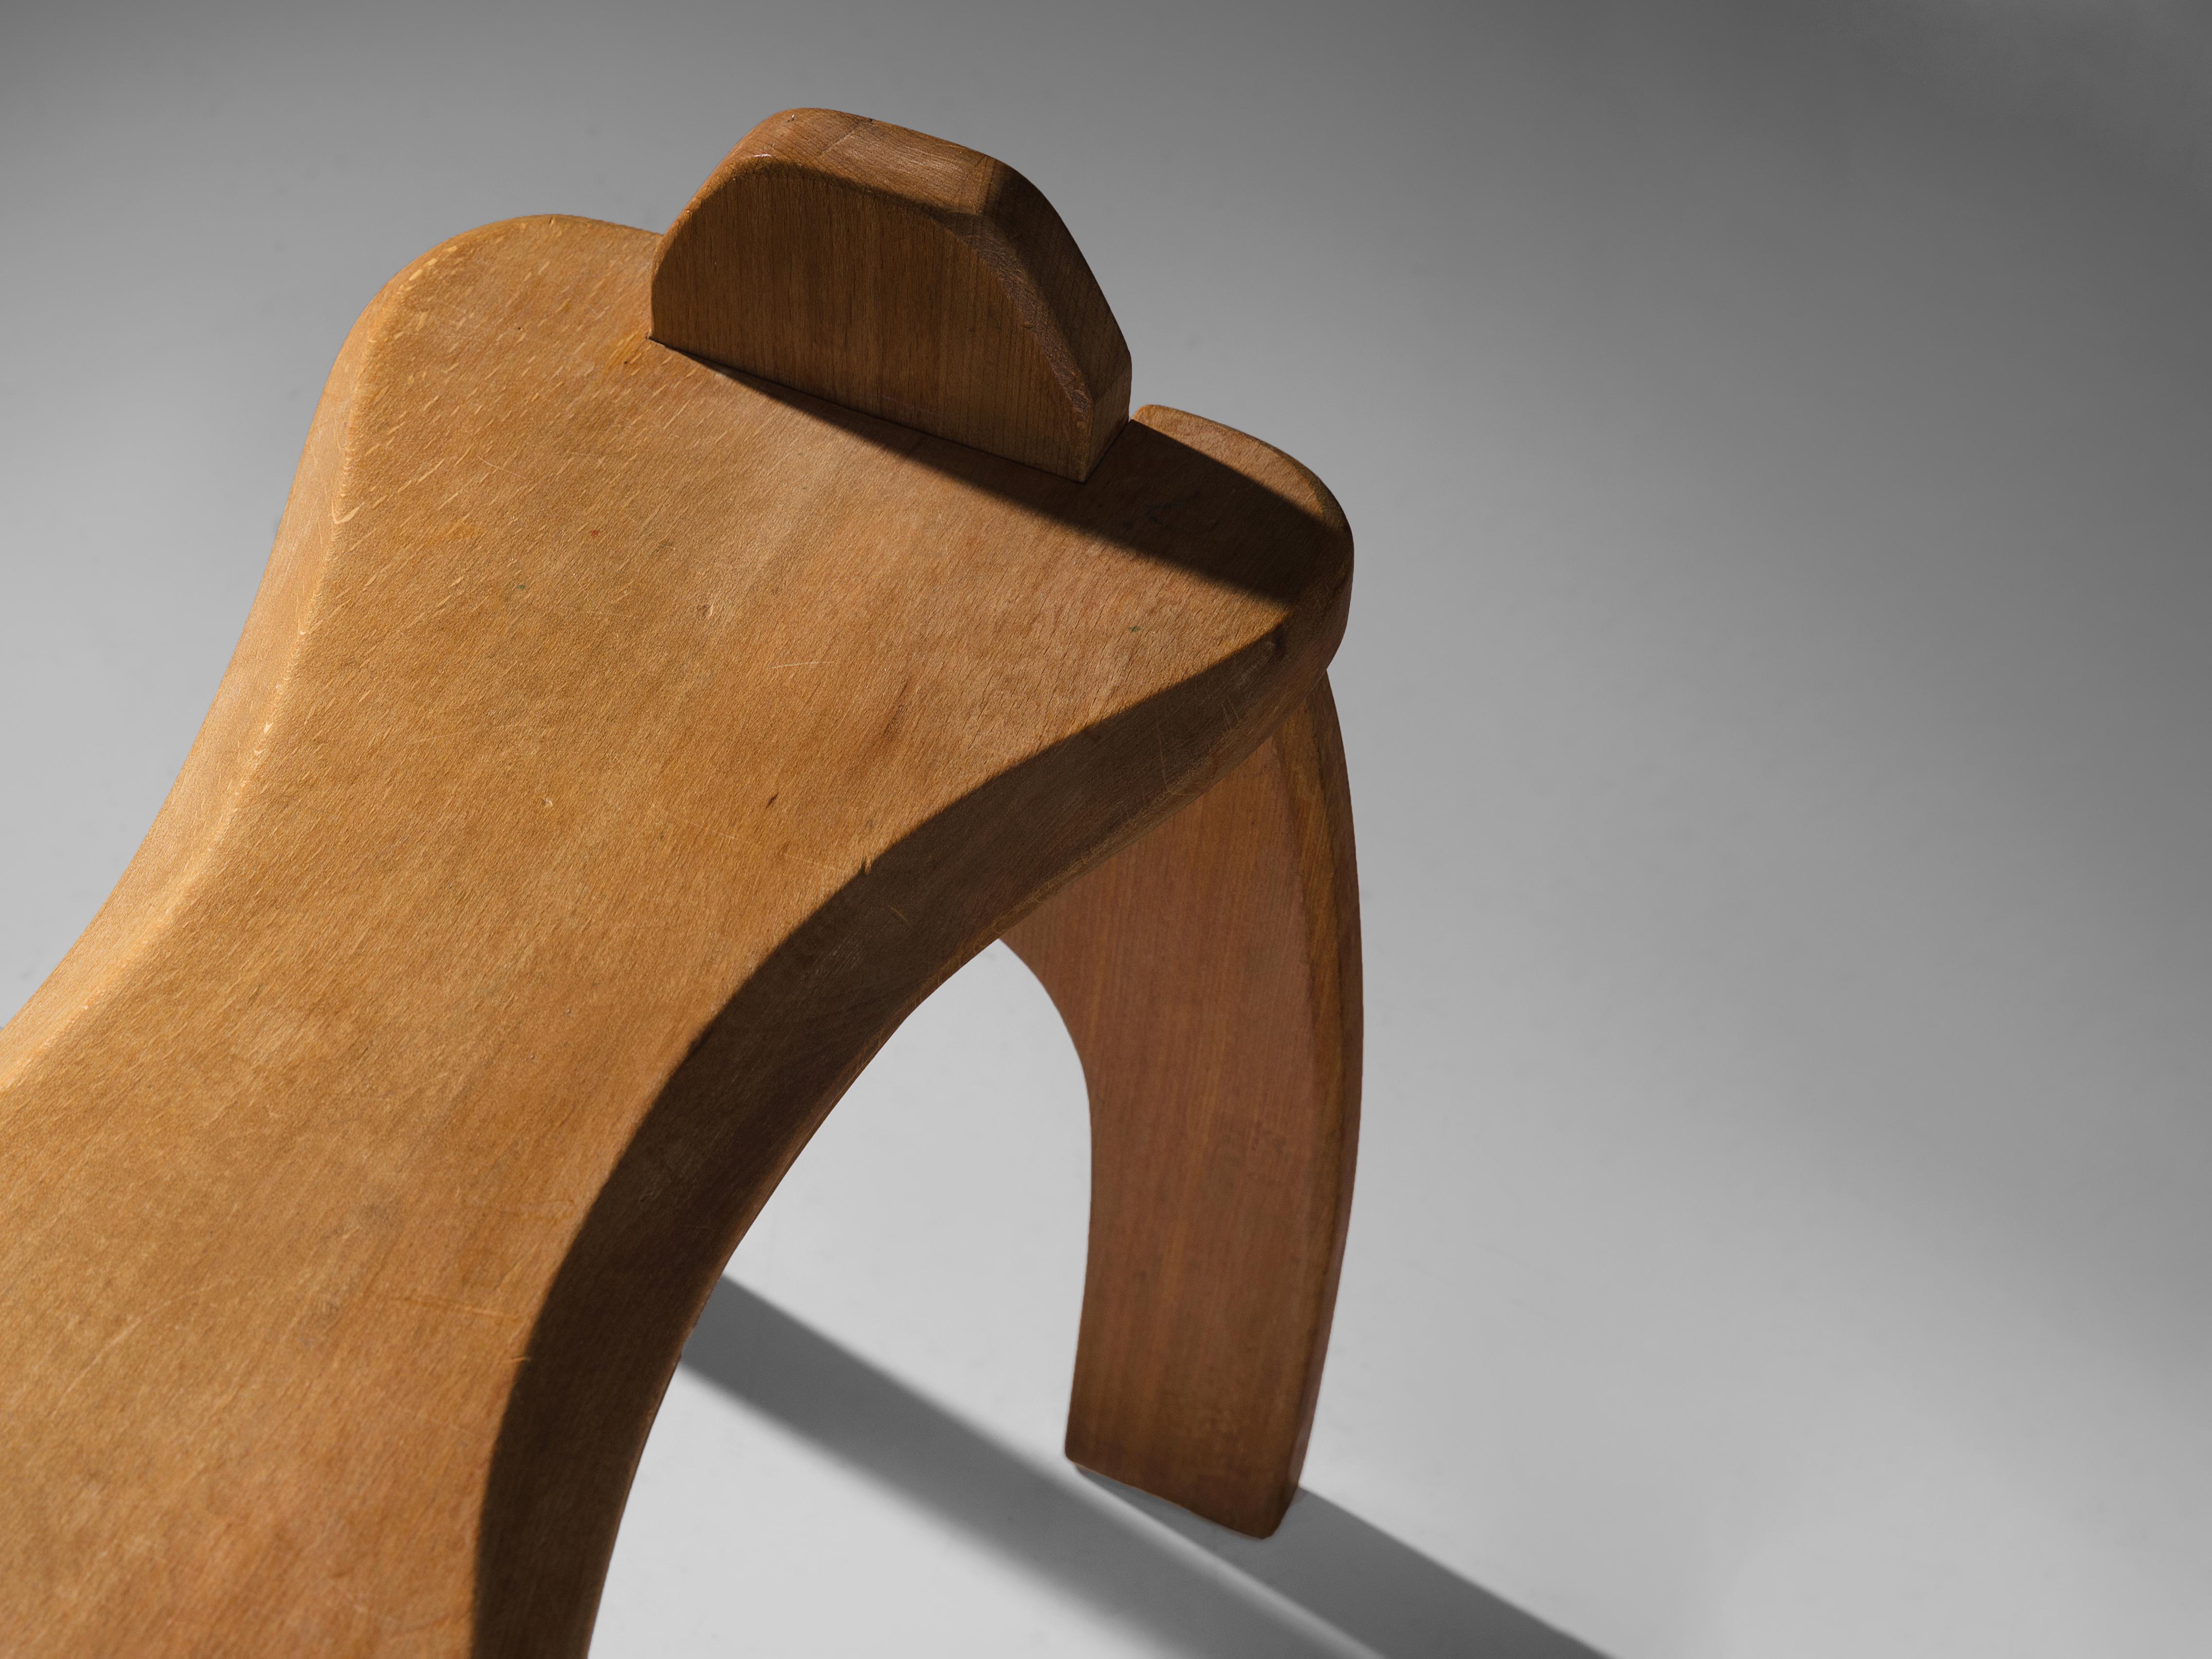 European Sculptural Wooden Stool in Solid Oak